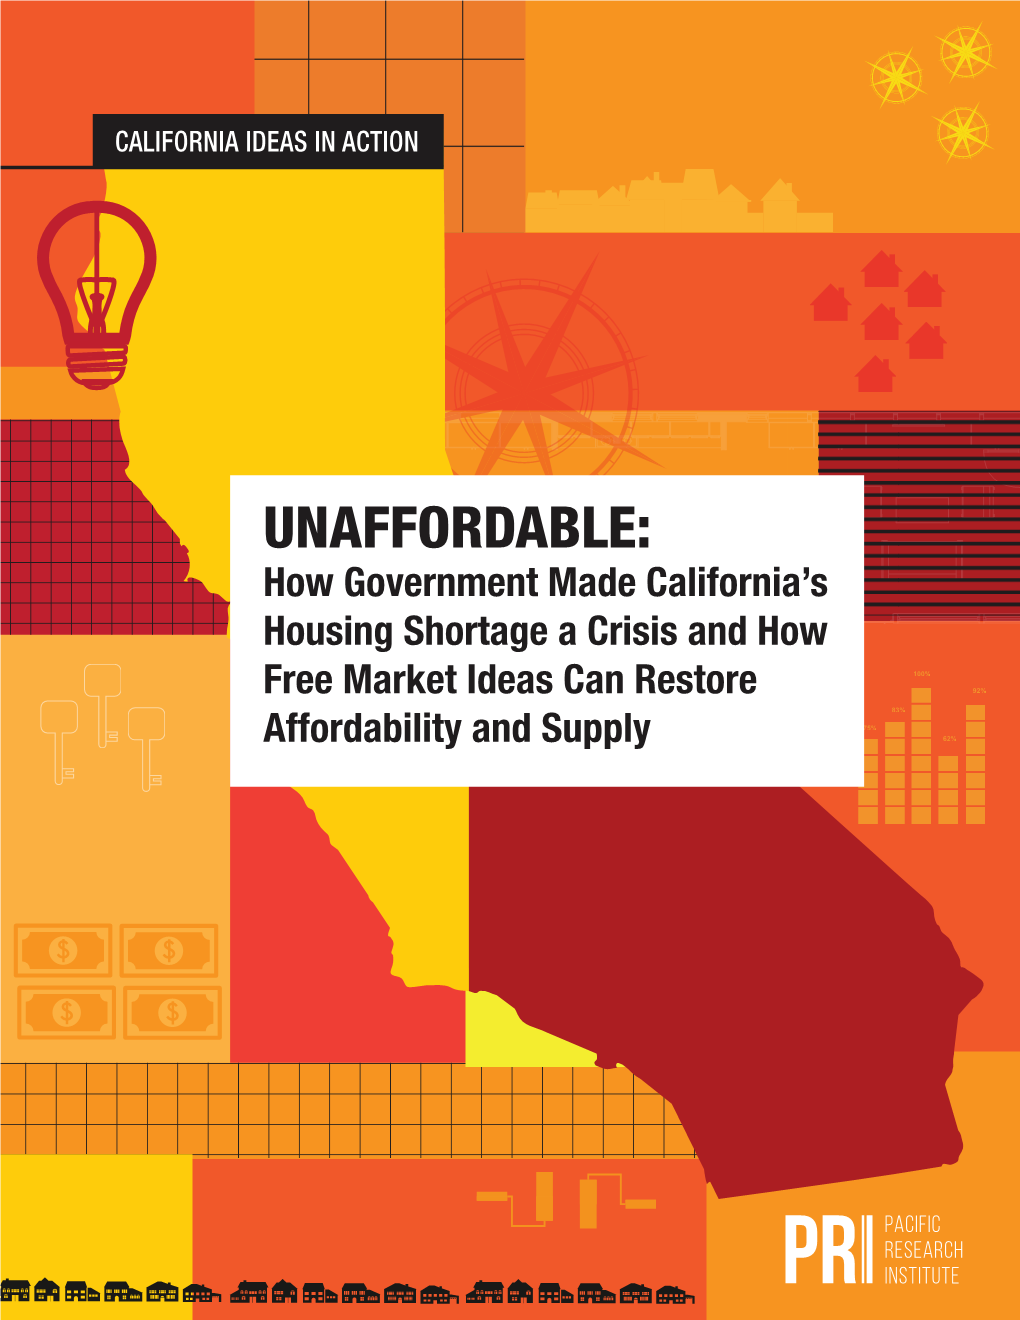 California's Housing Crisis